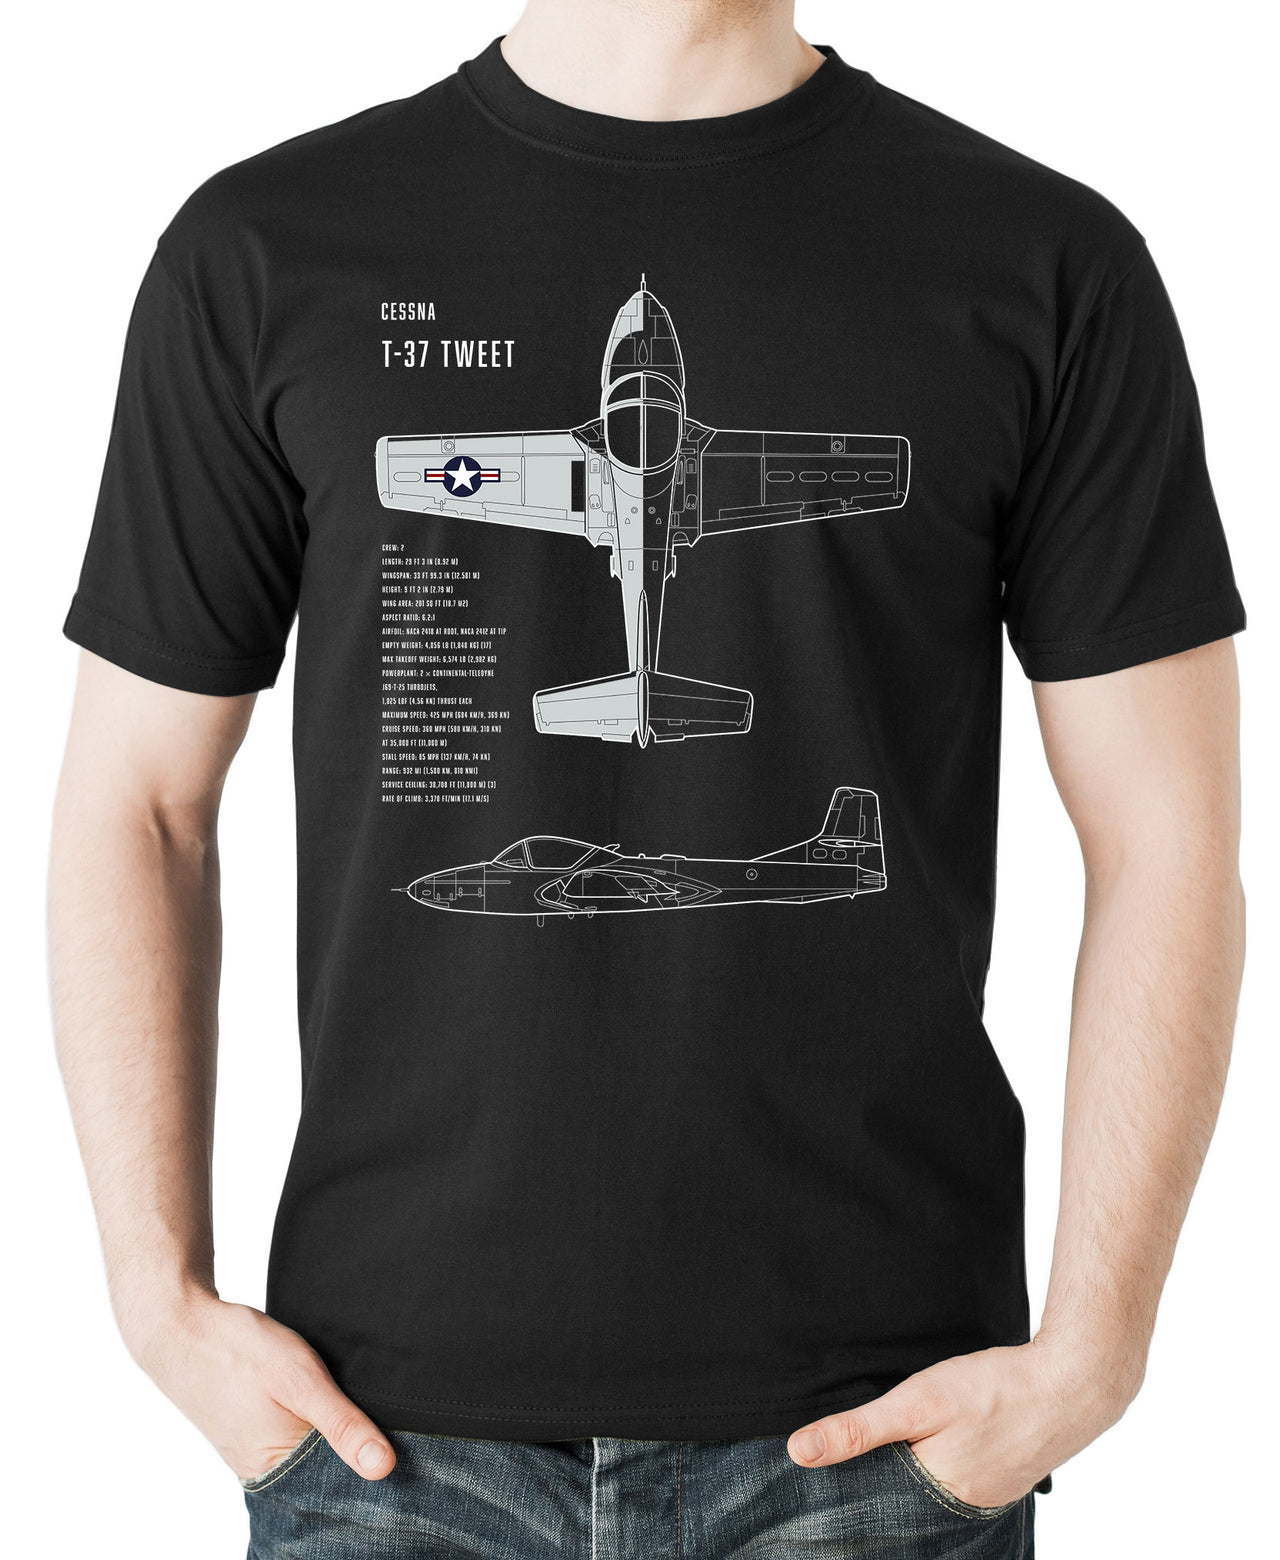 T-37 Tweet - T-shirt